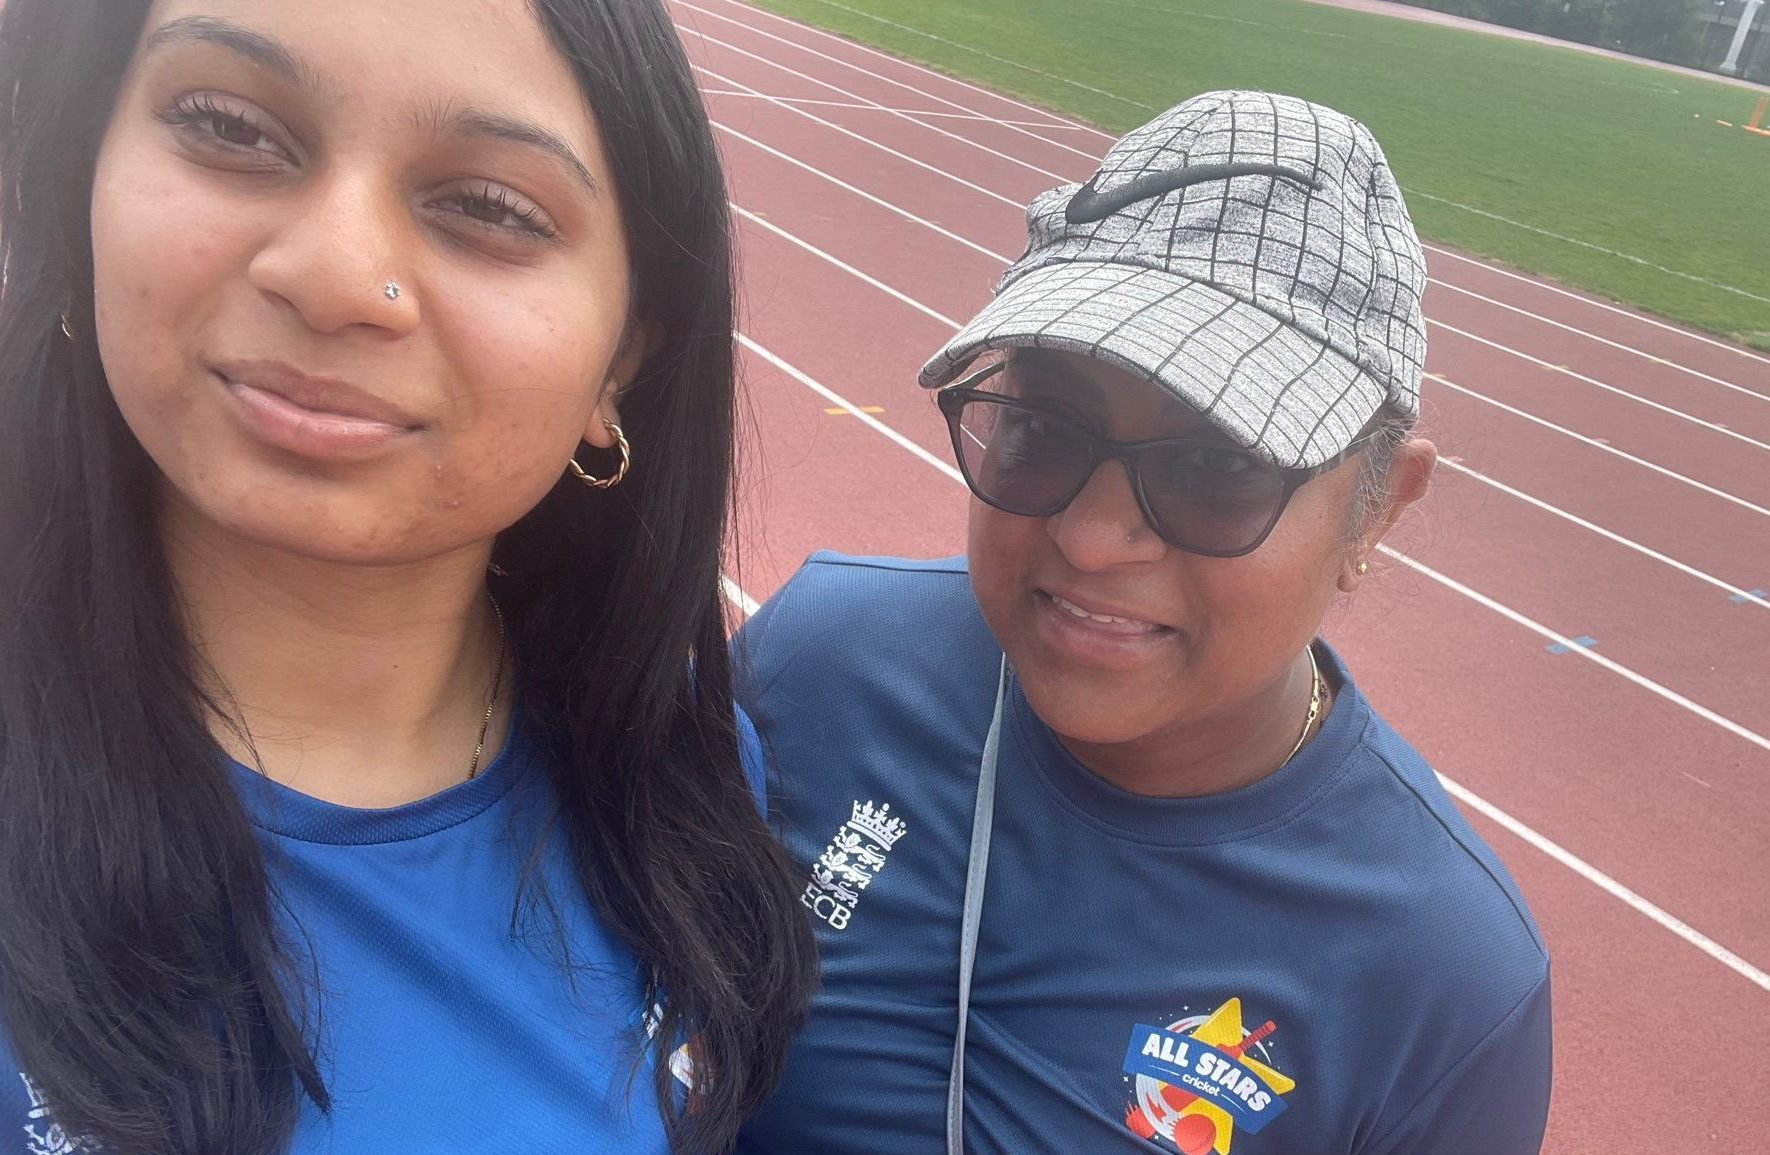 Mum Bhavini and daughter Shreya playing cricket together